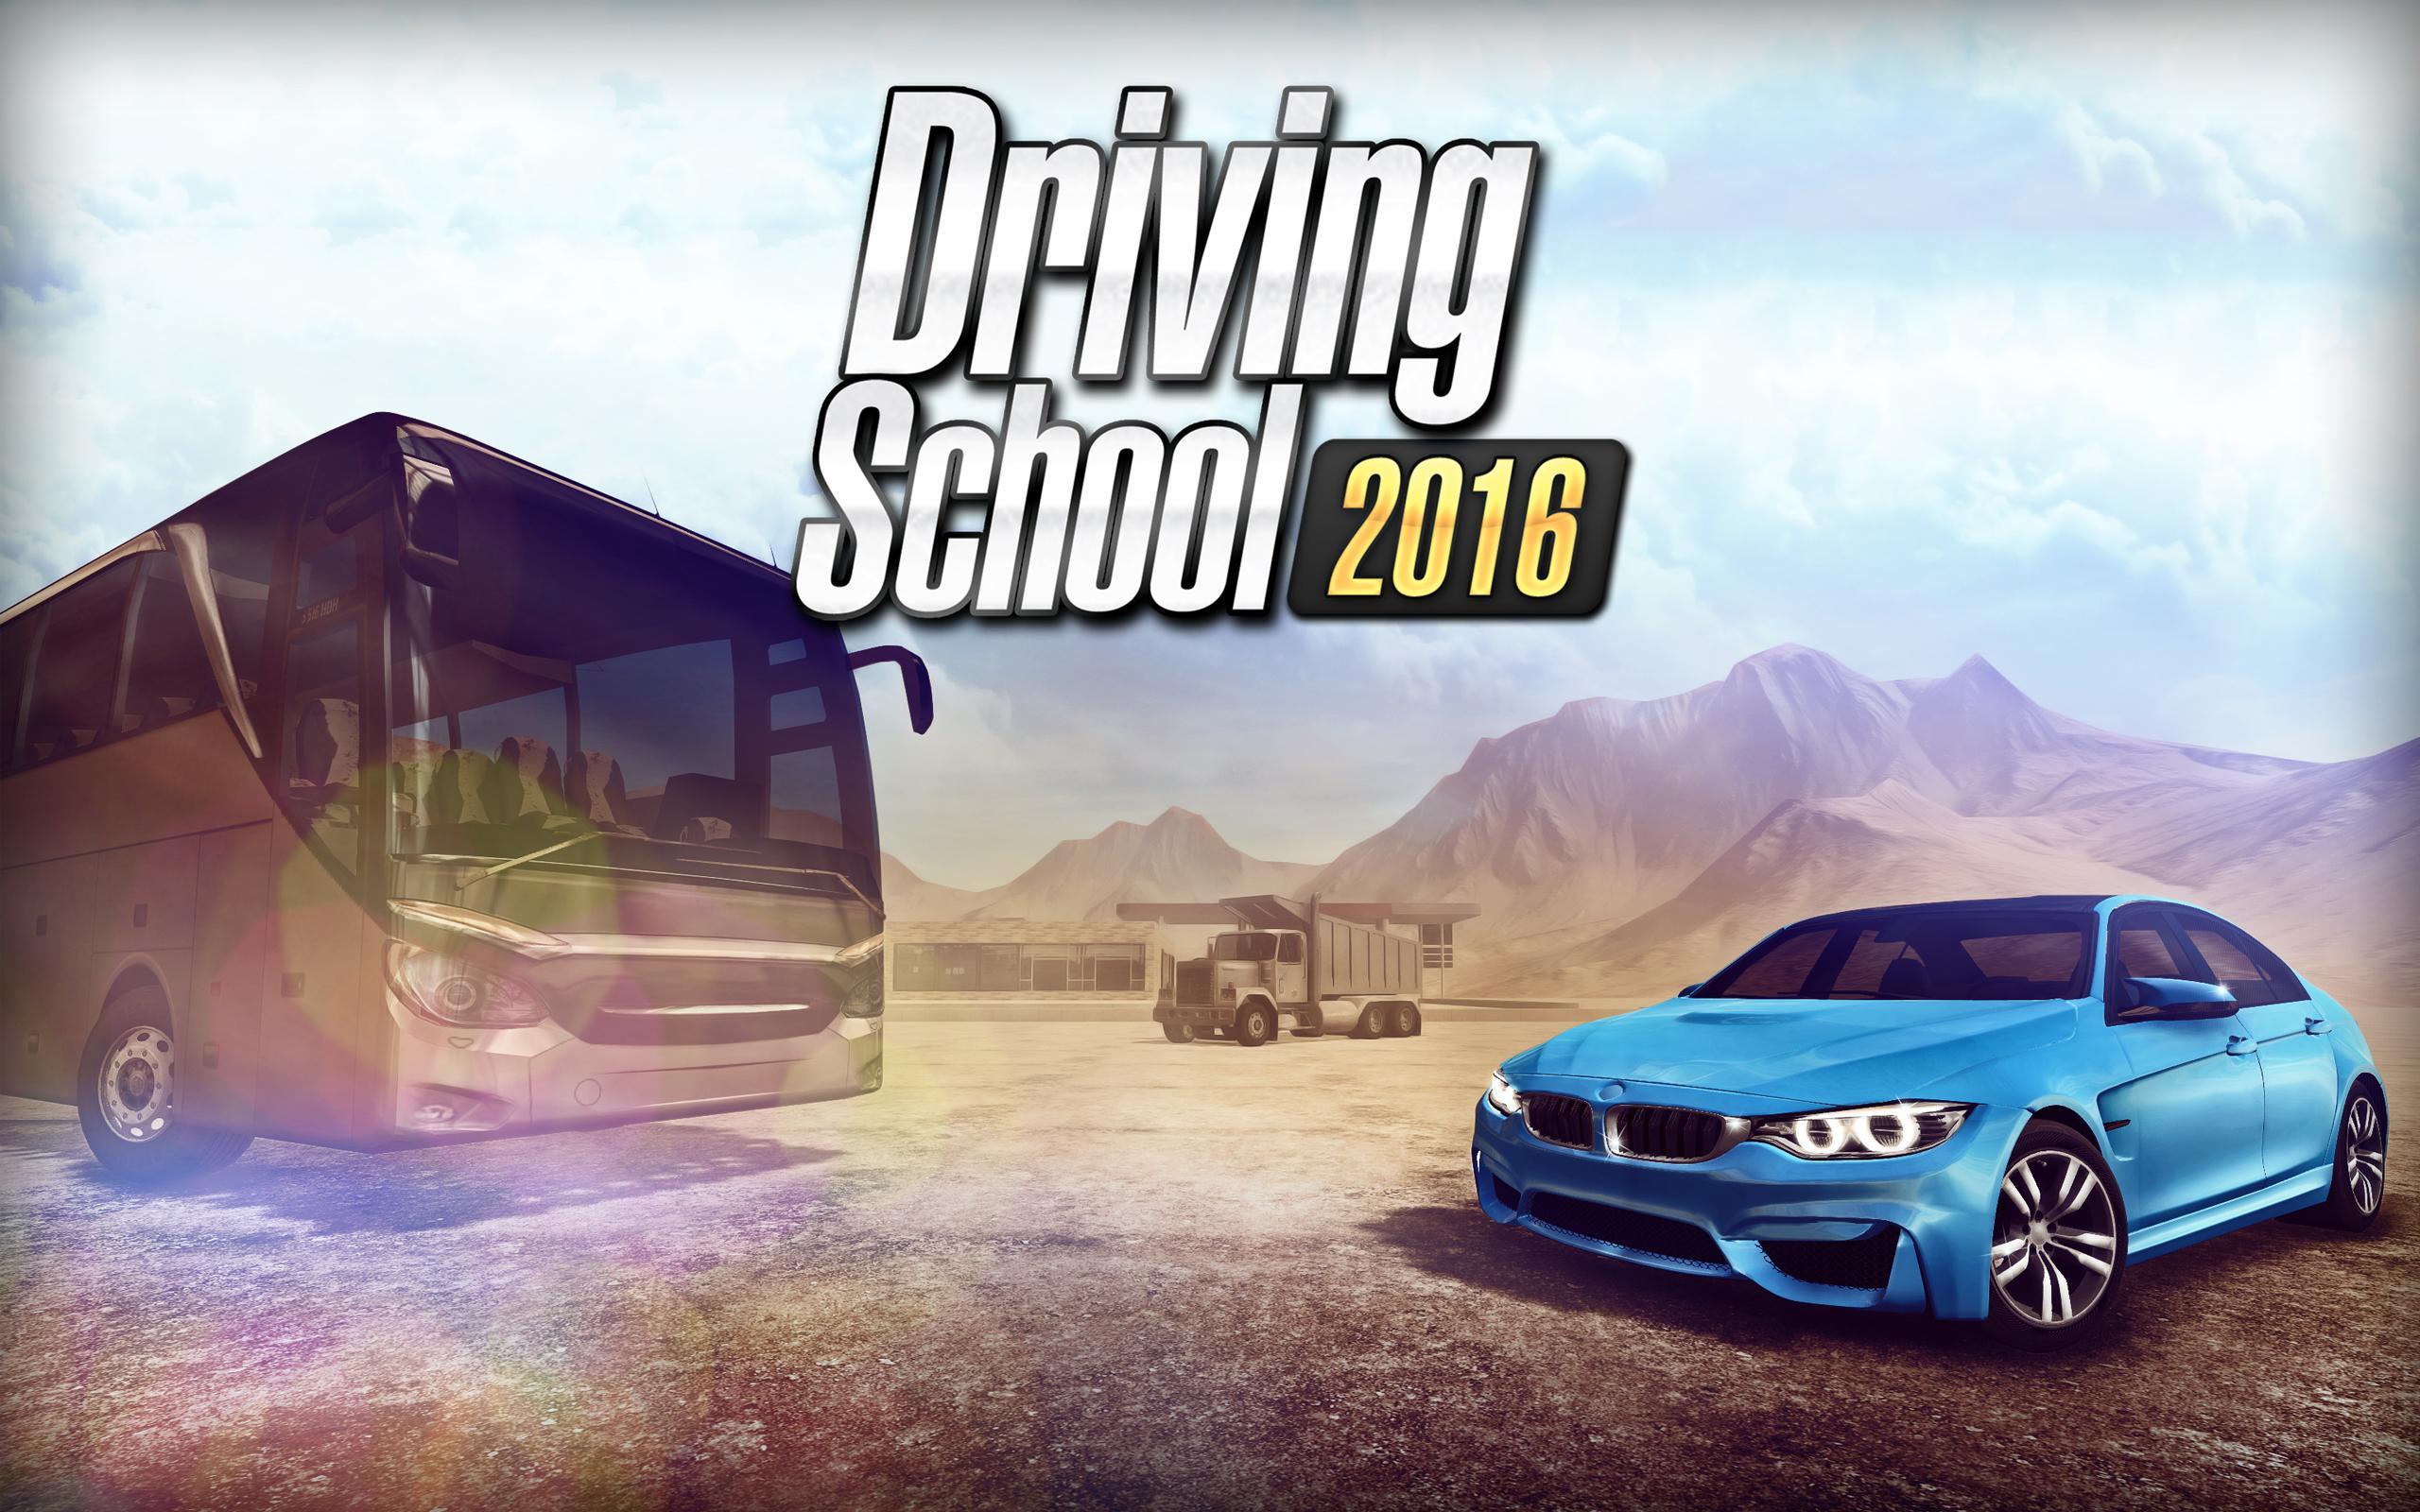 Driving School 2016 3.1 Screenshot 13